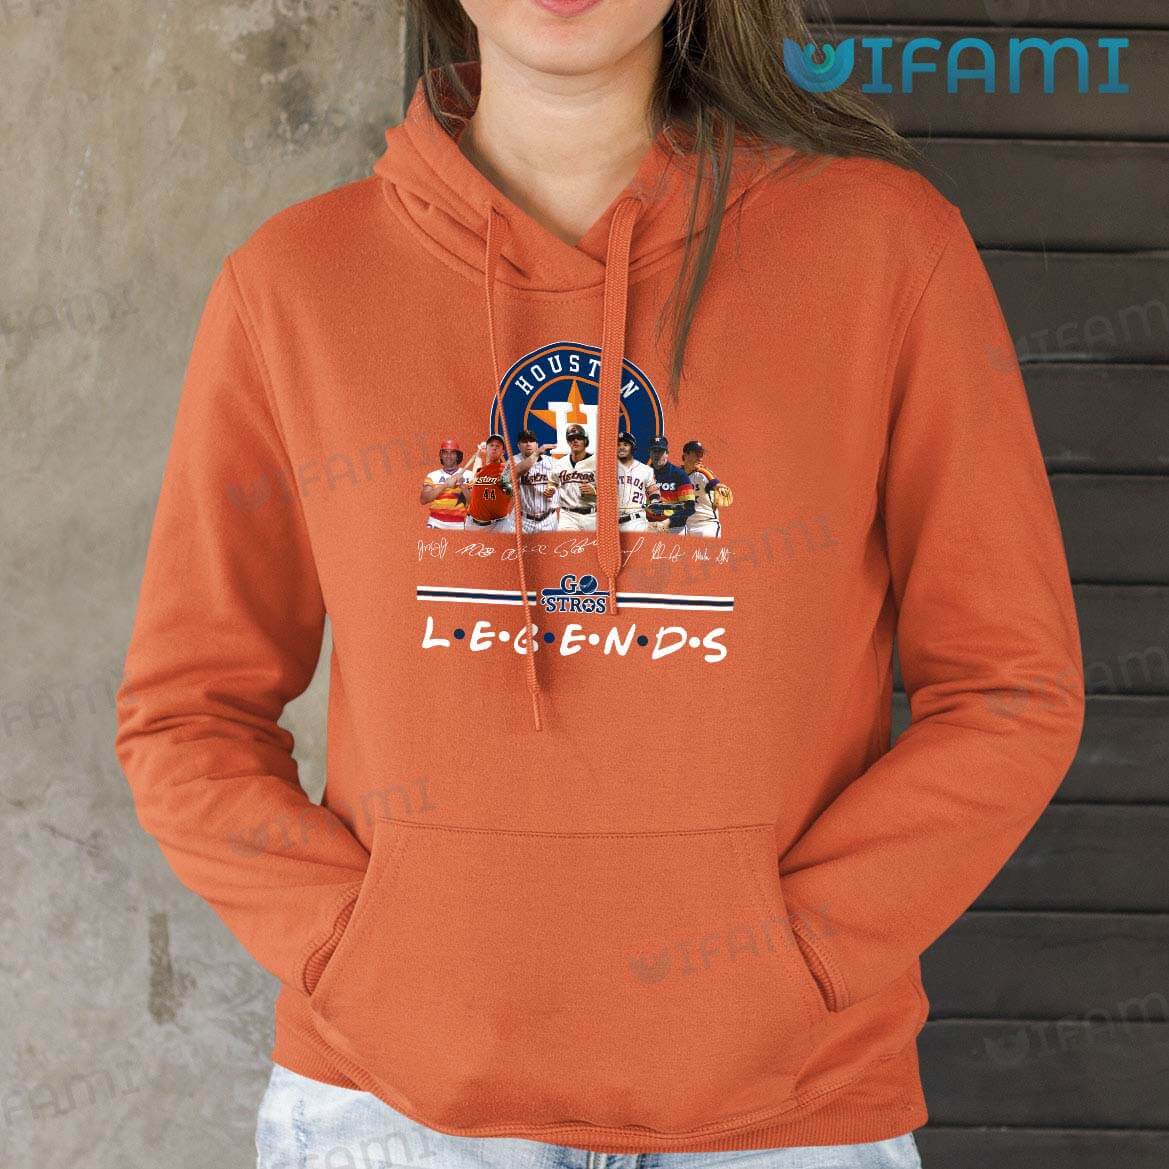 Premium houston Astros Go Stros Logo T-Shirt, hoodie, sweater